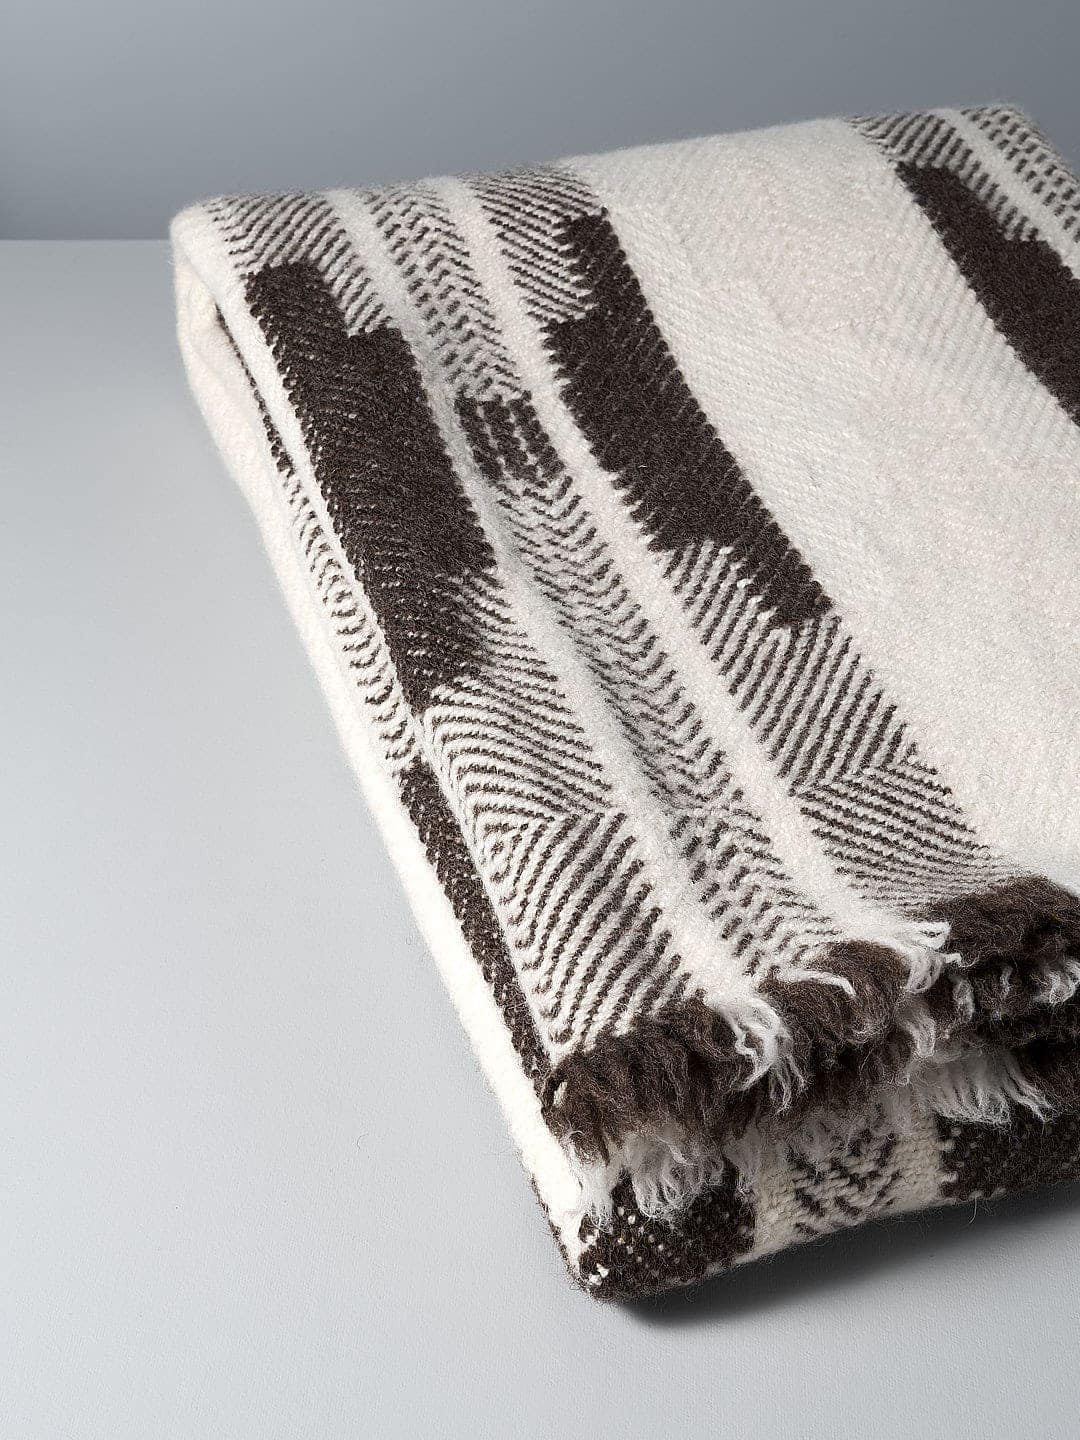 A Rodopska Takan Bulgarian Wool Blanket on a white surface.